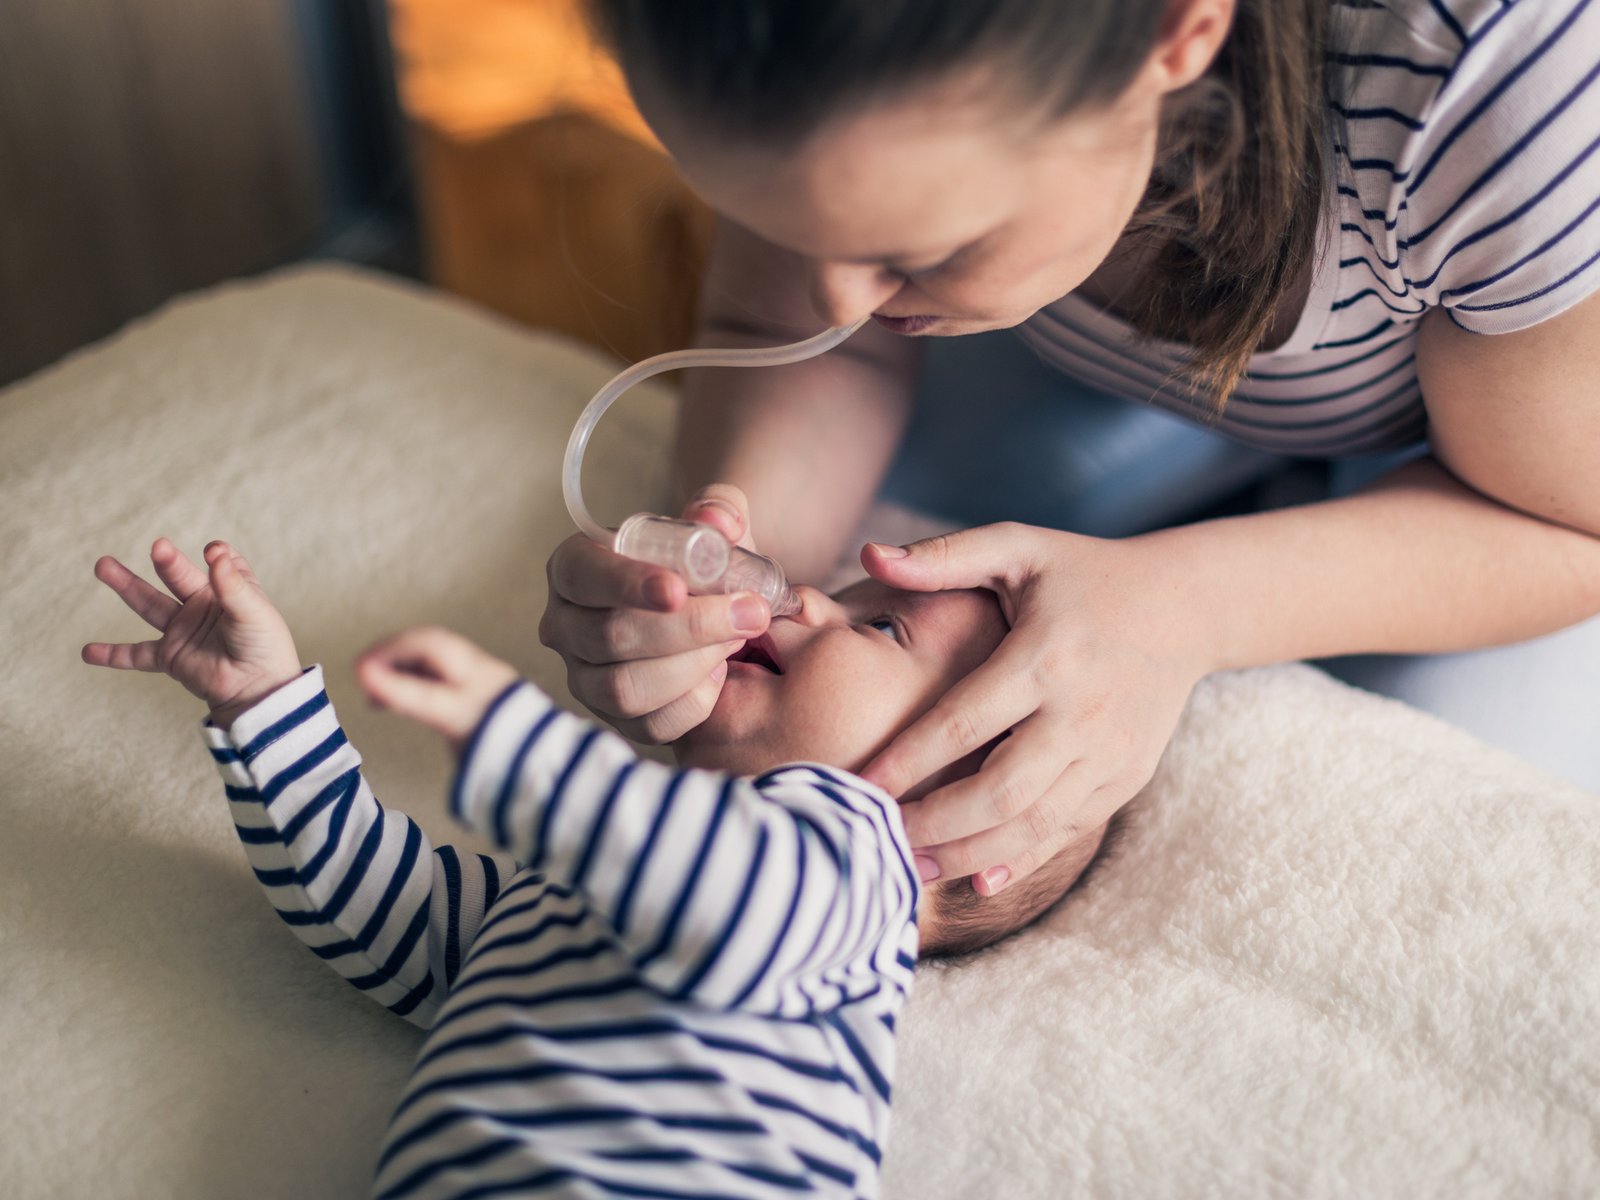 picco pocket Nasensauger - Anwendung bei Babies 